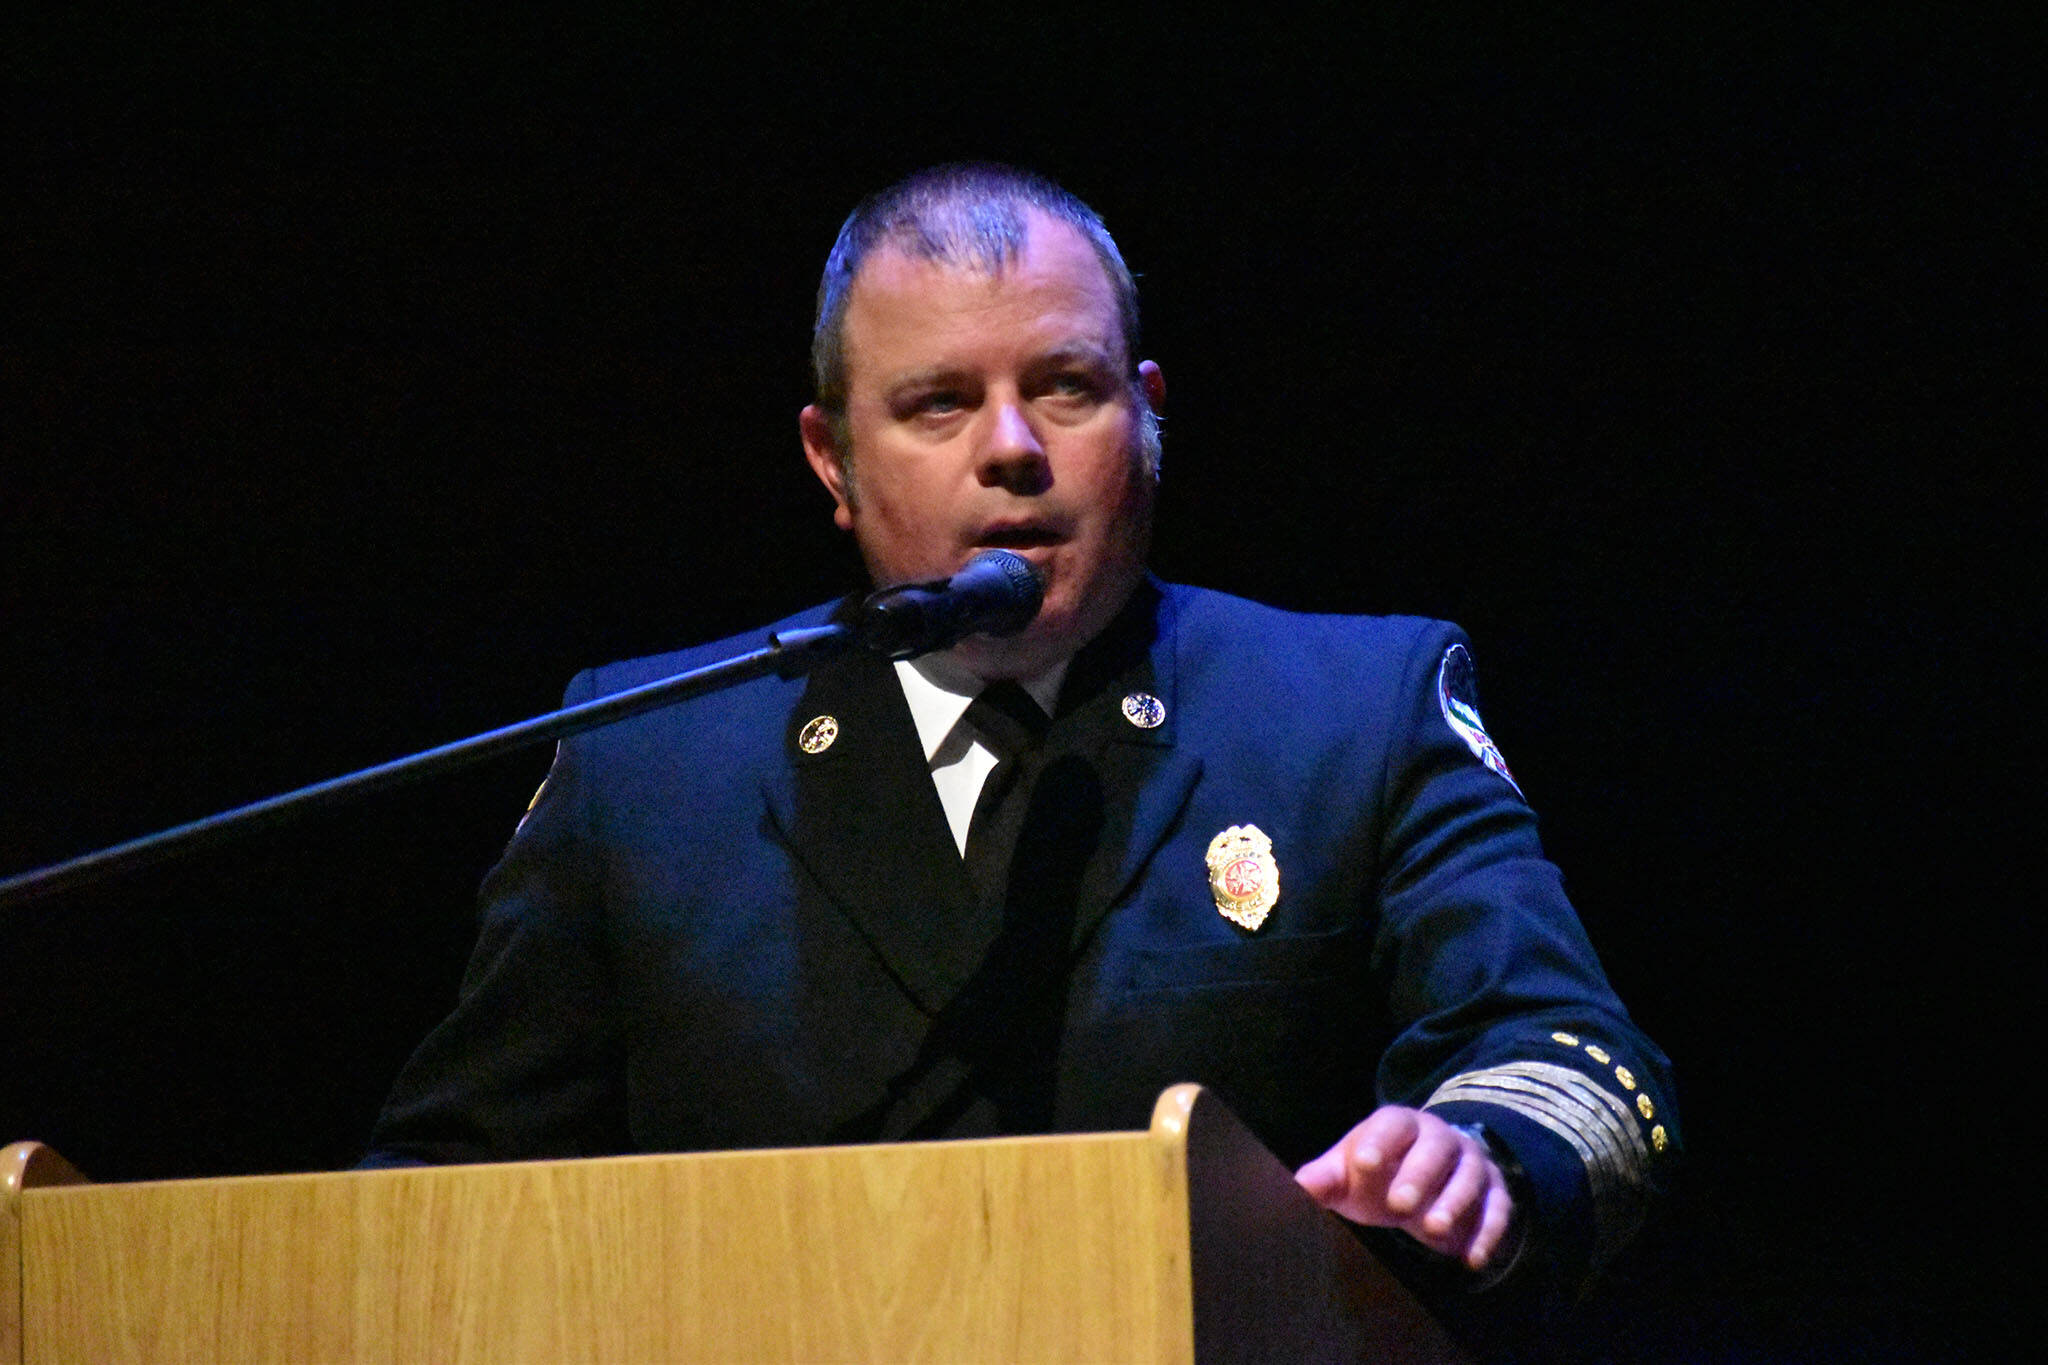 Fire Chief Eric Skogen speaks during the graduation ceremony.